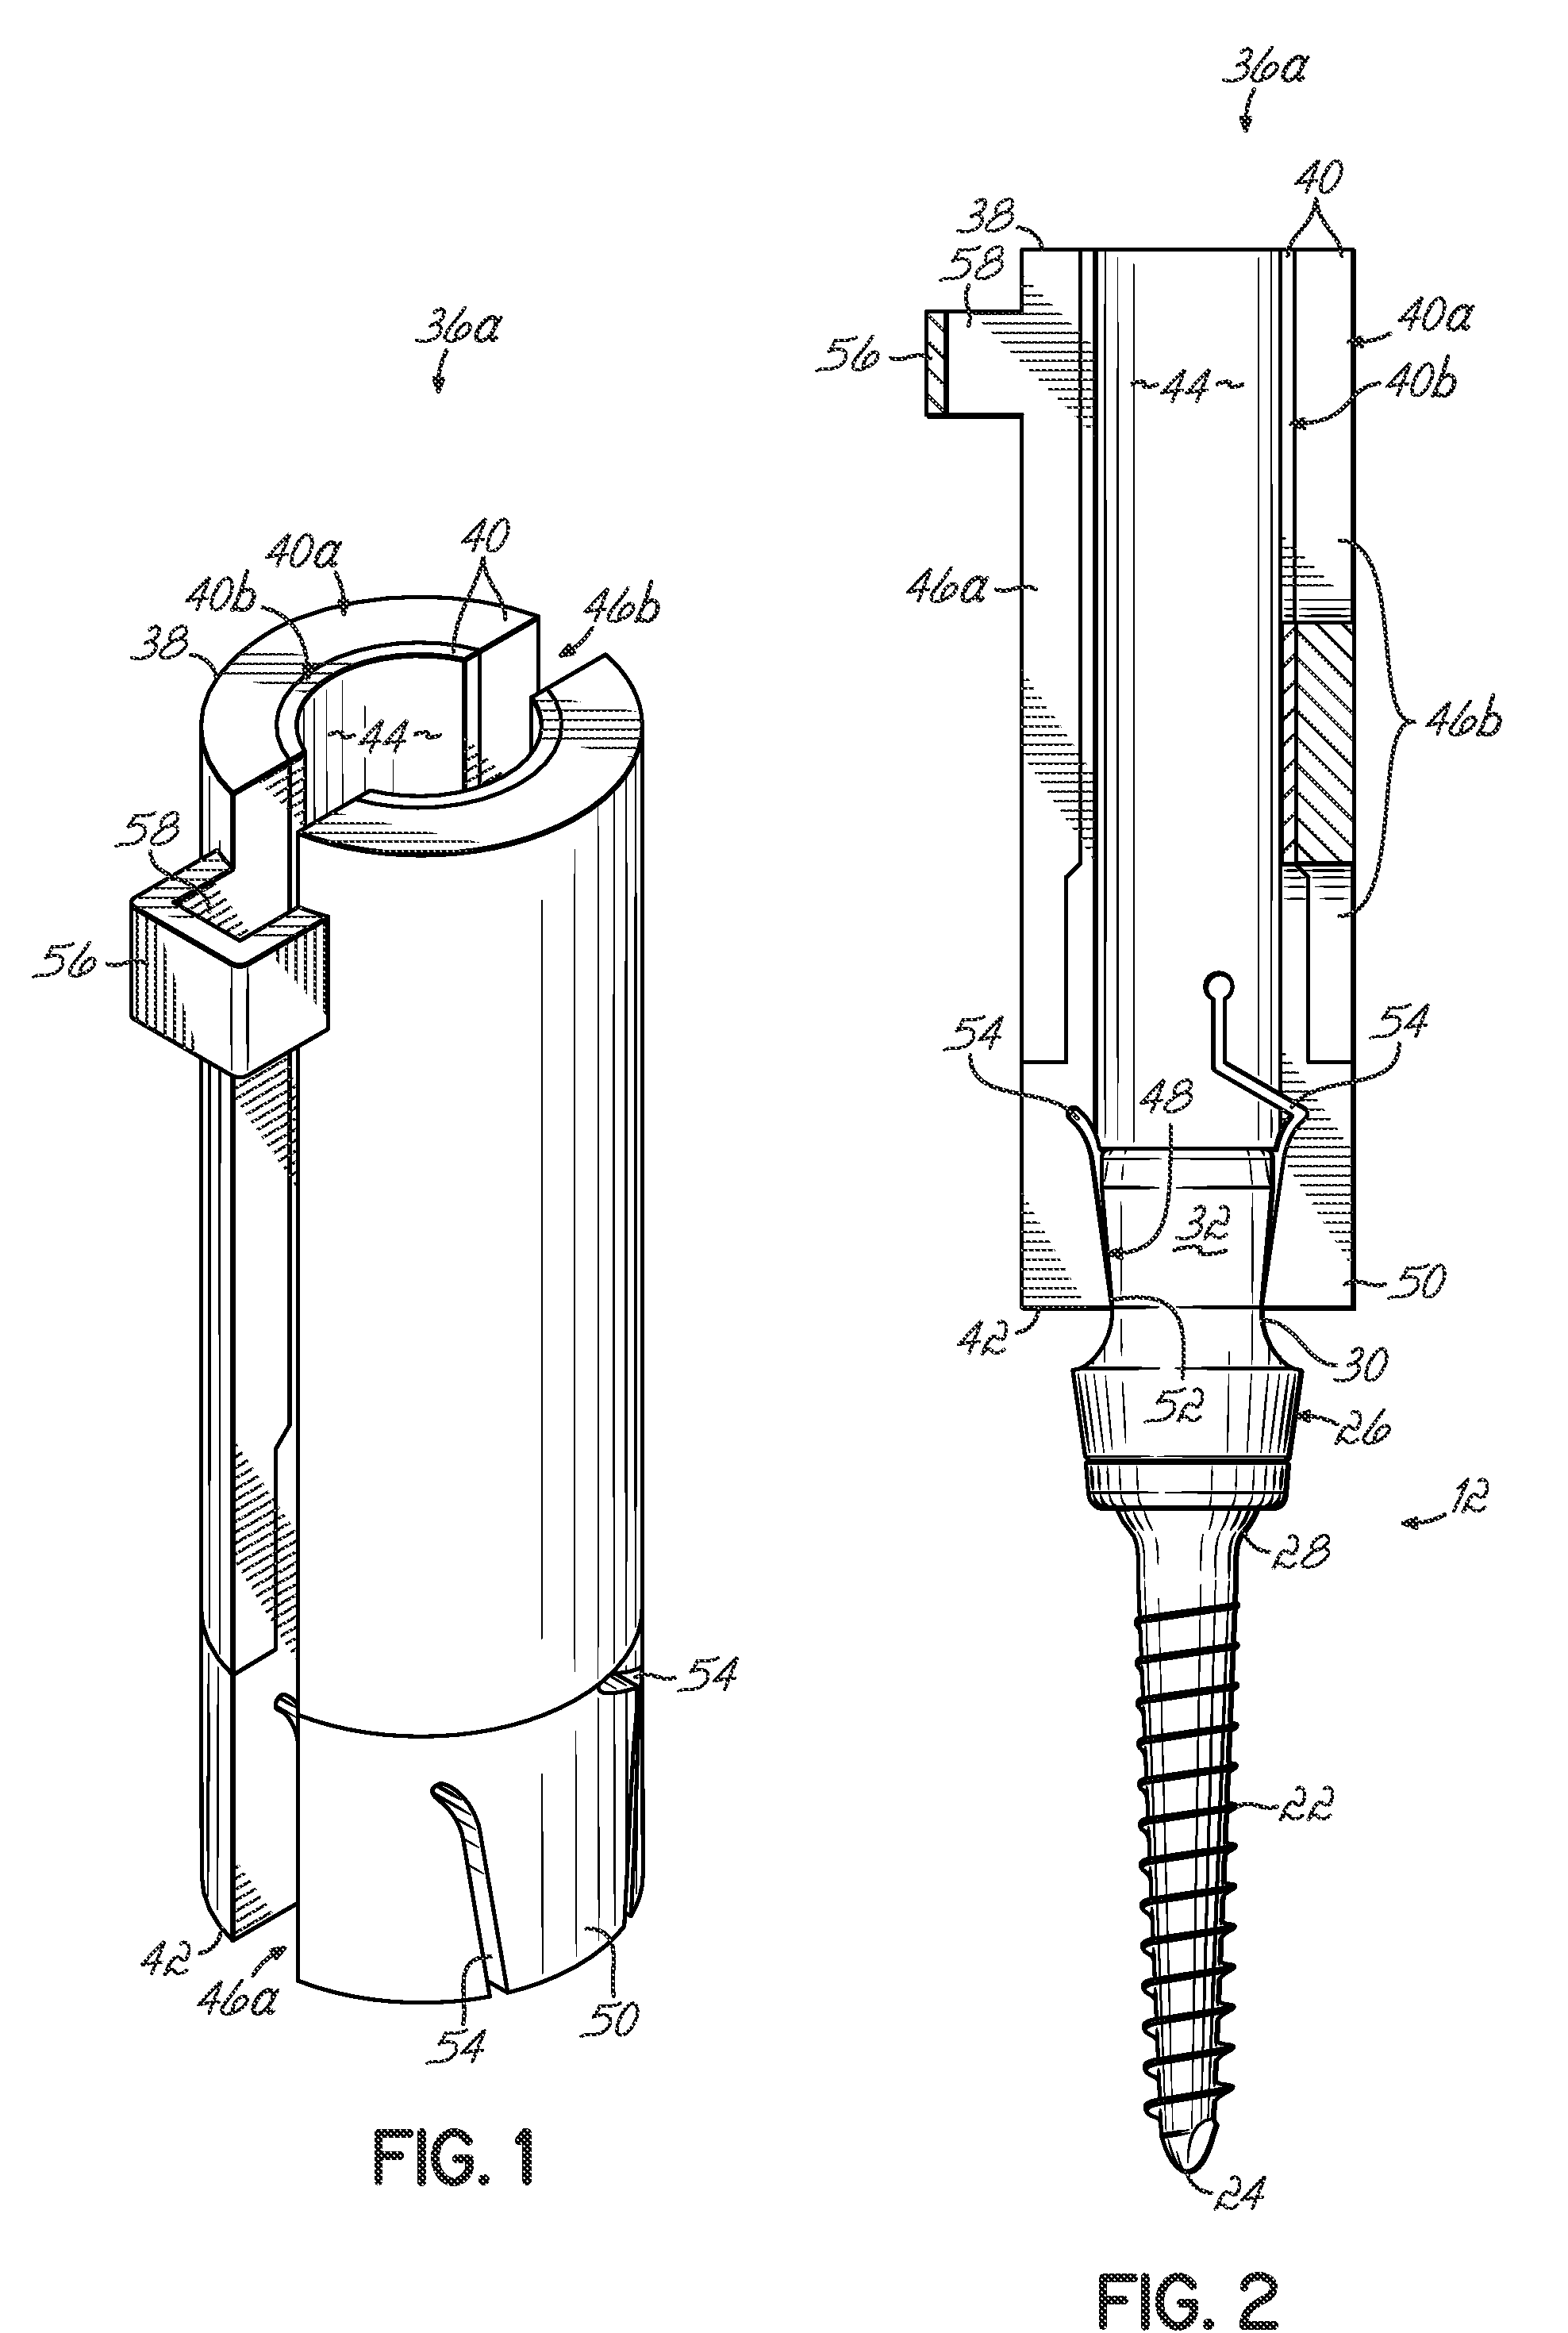 Instrumentation and associated techniques for minimally invasive vertebral rod installation